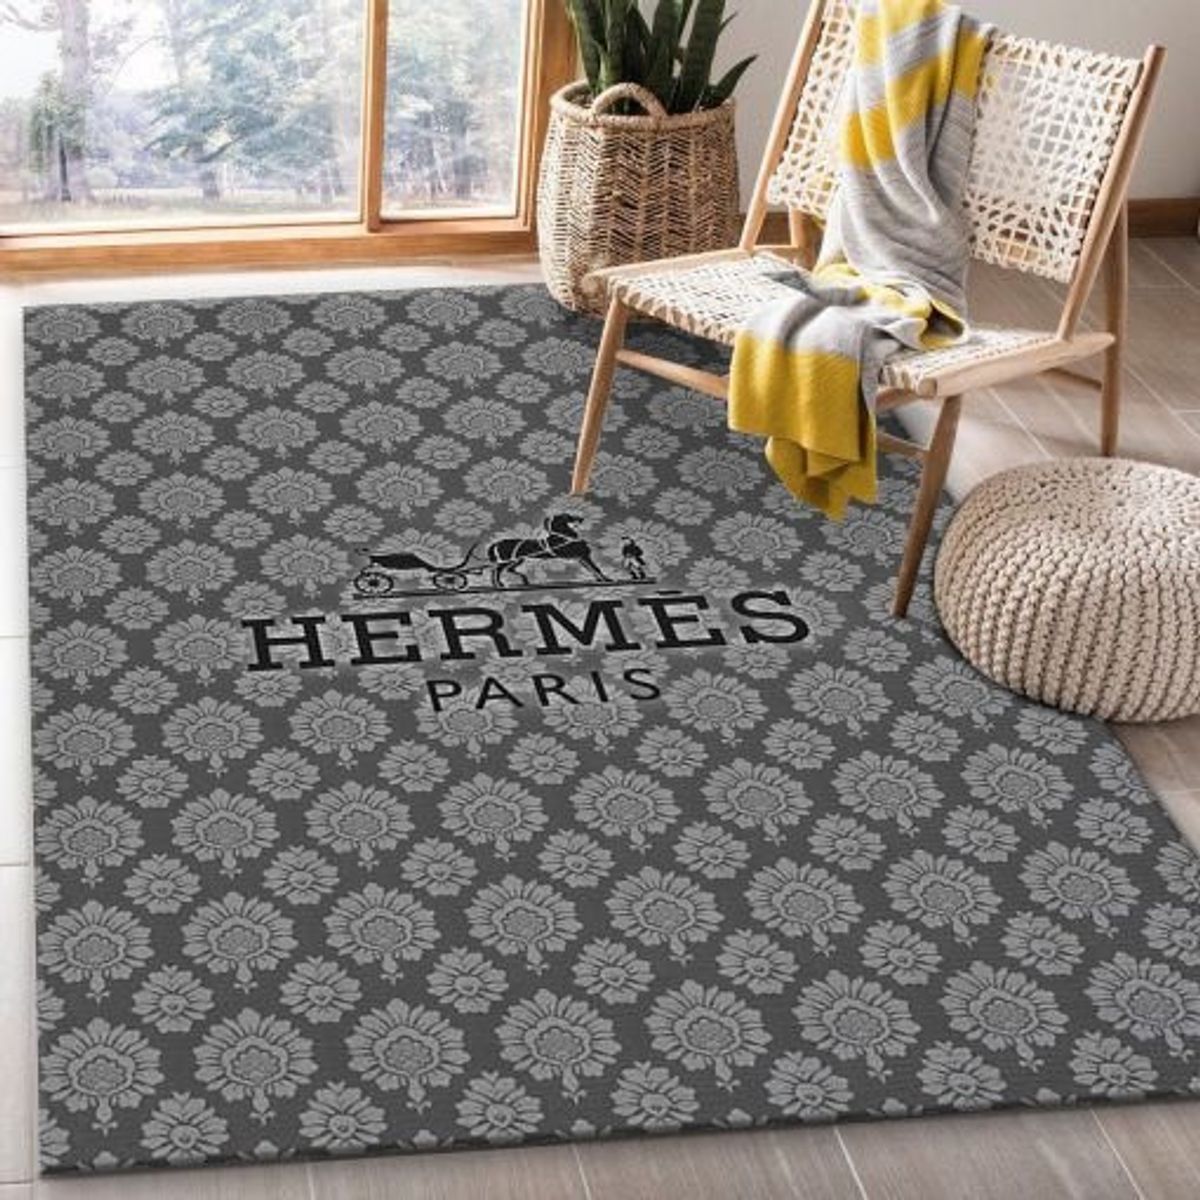 Hermes Paris Grey Color Luxury Brand Carpet Rug Limited Edition